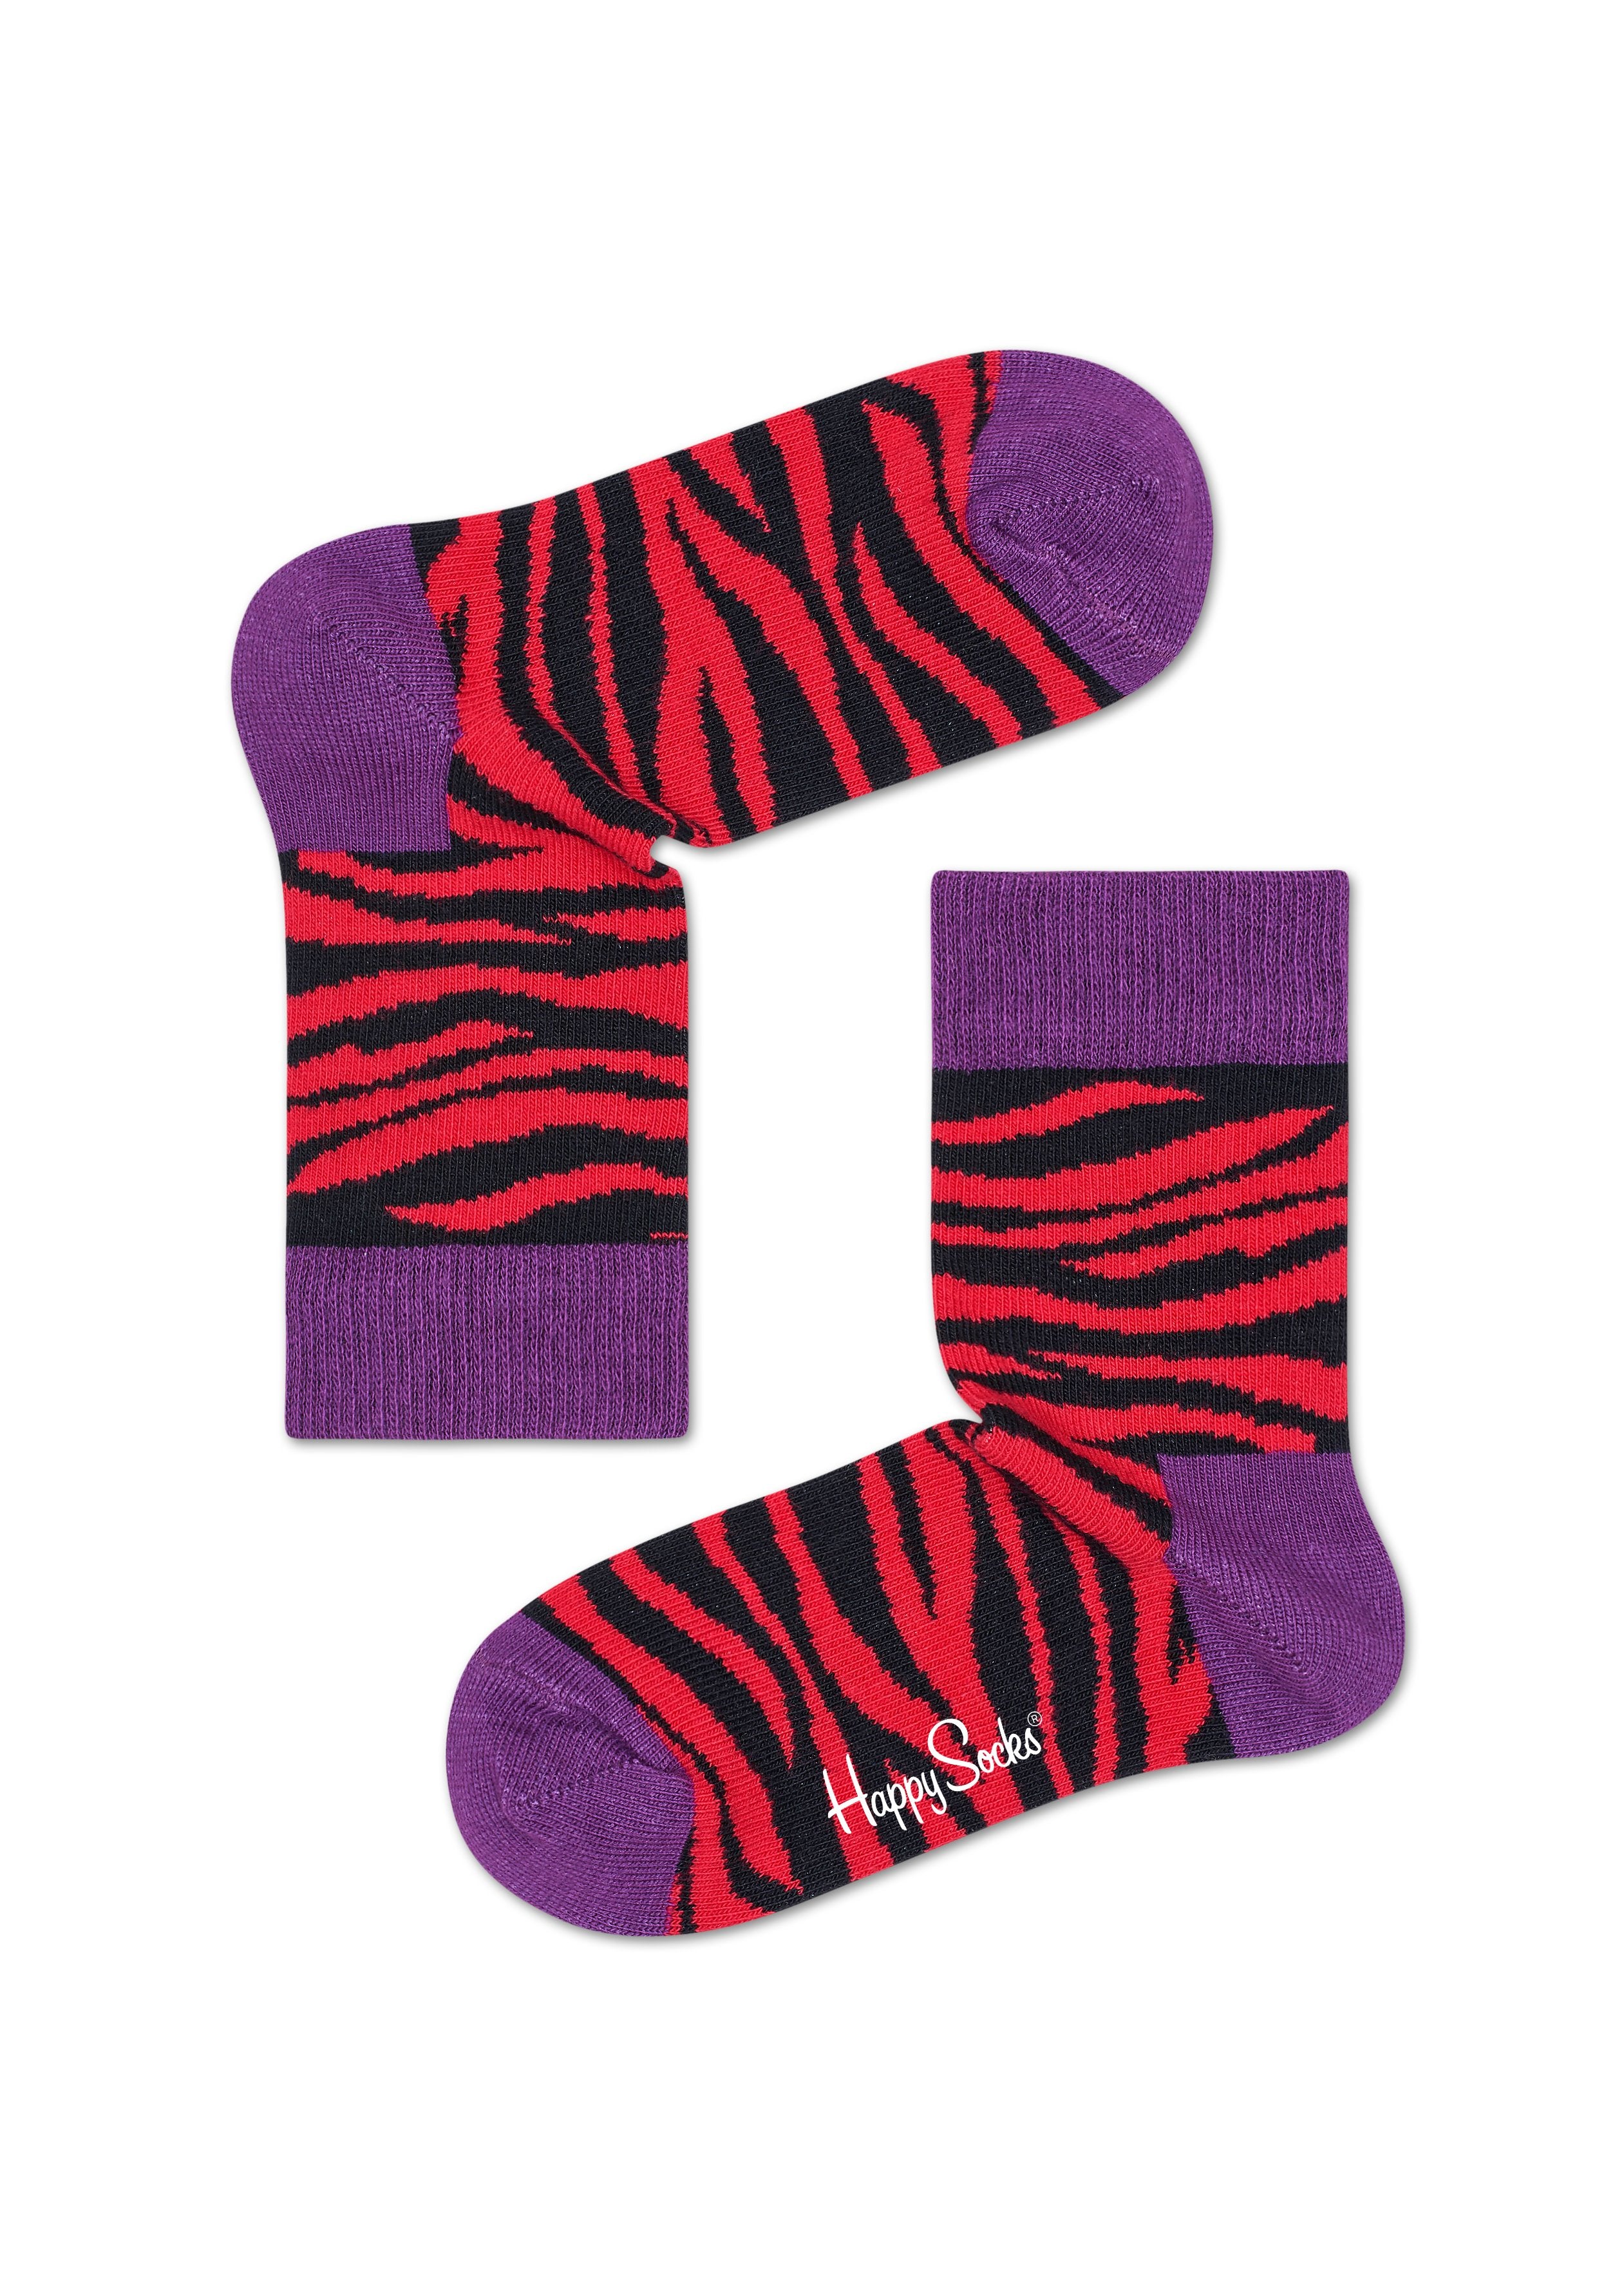 Detské červené ponožky Happy Socks so vzorom zebry, vzor Zebra